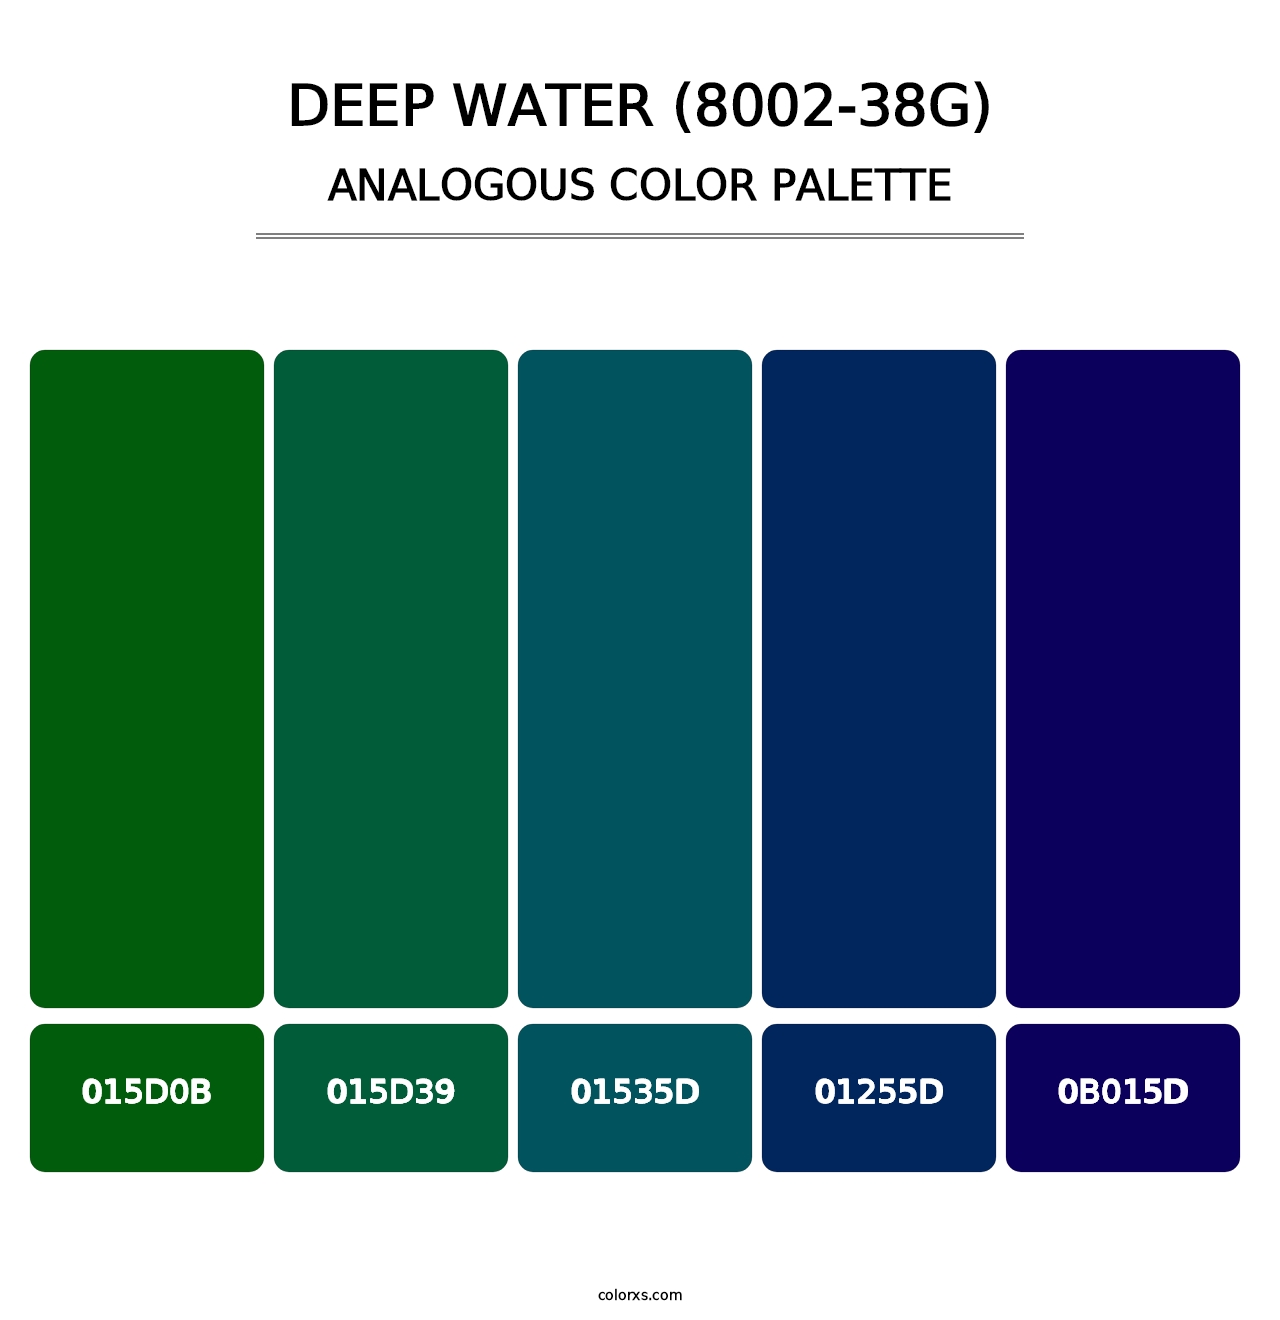 Deep Water (8002-38G) - Analogous Color Palette